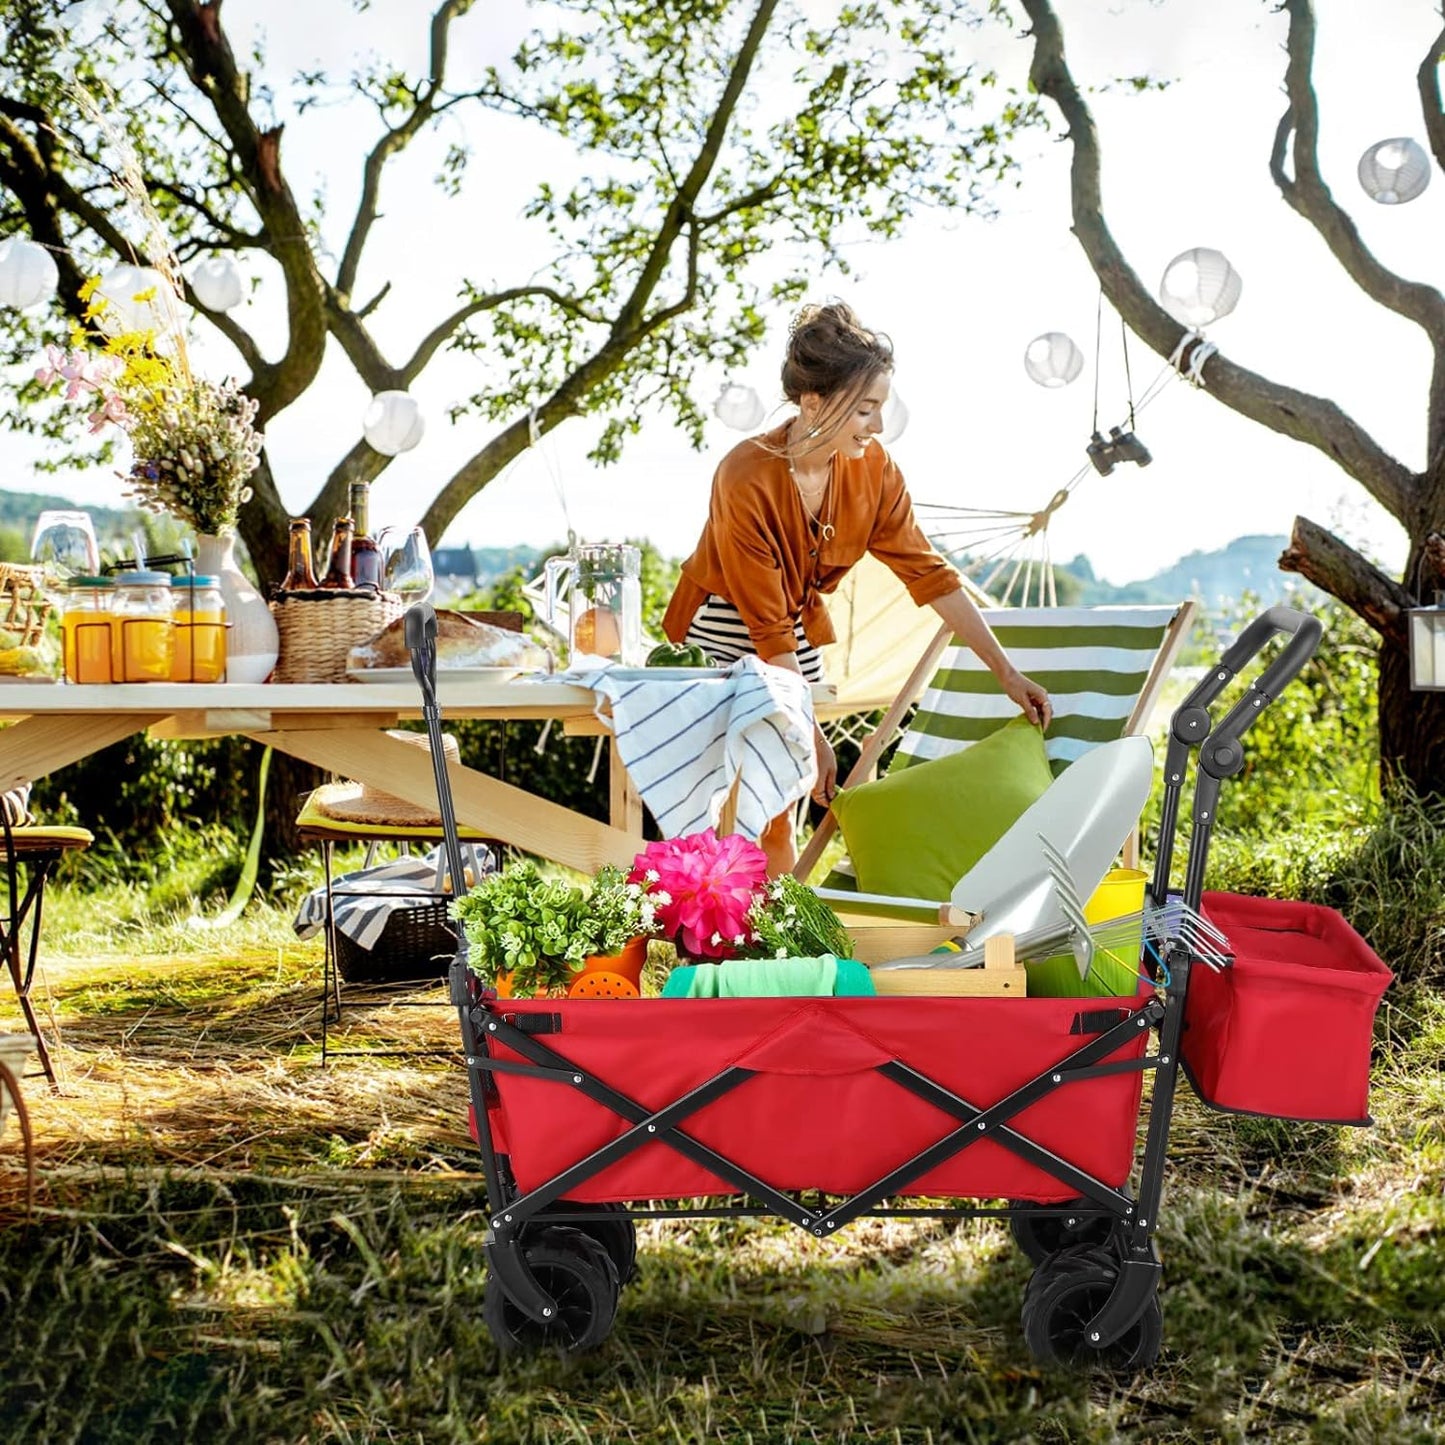 Arlopu Collapsible Wagon Folding Garden Cart W/ Canopy and Adjustable Handles